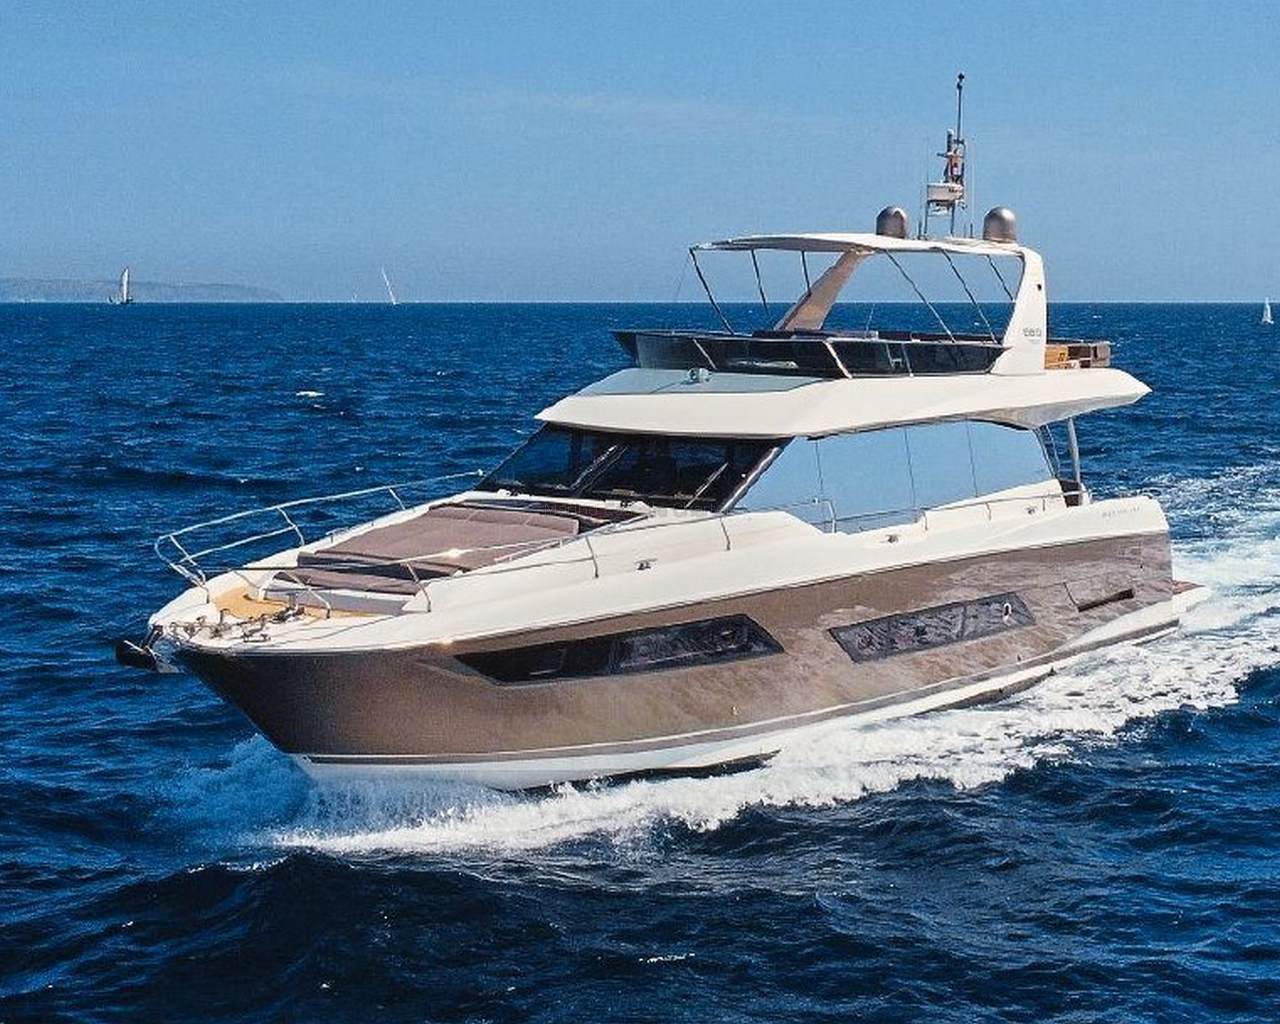 Power boat FOR CHARTER, year 2016 brand Prestige and model 680, available in Marina Port de Mallorca Palma Mallorca España